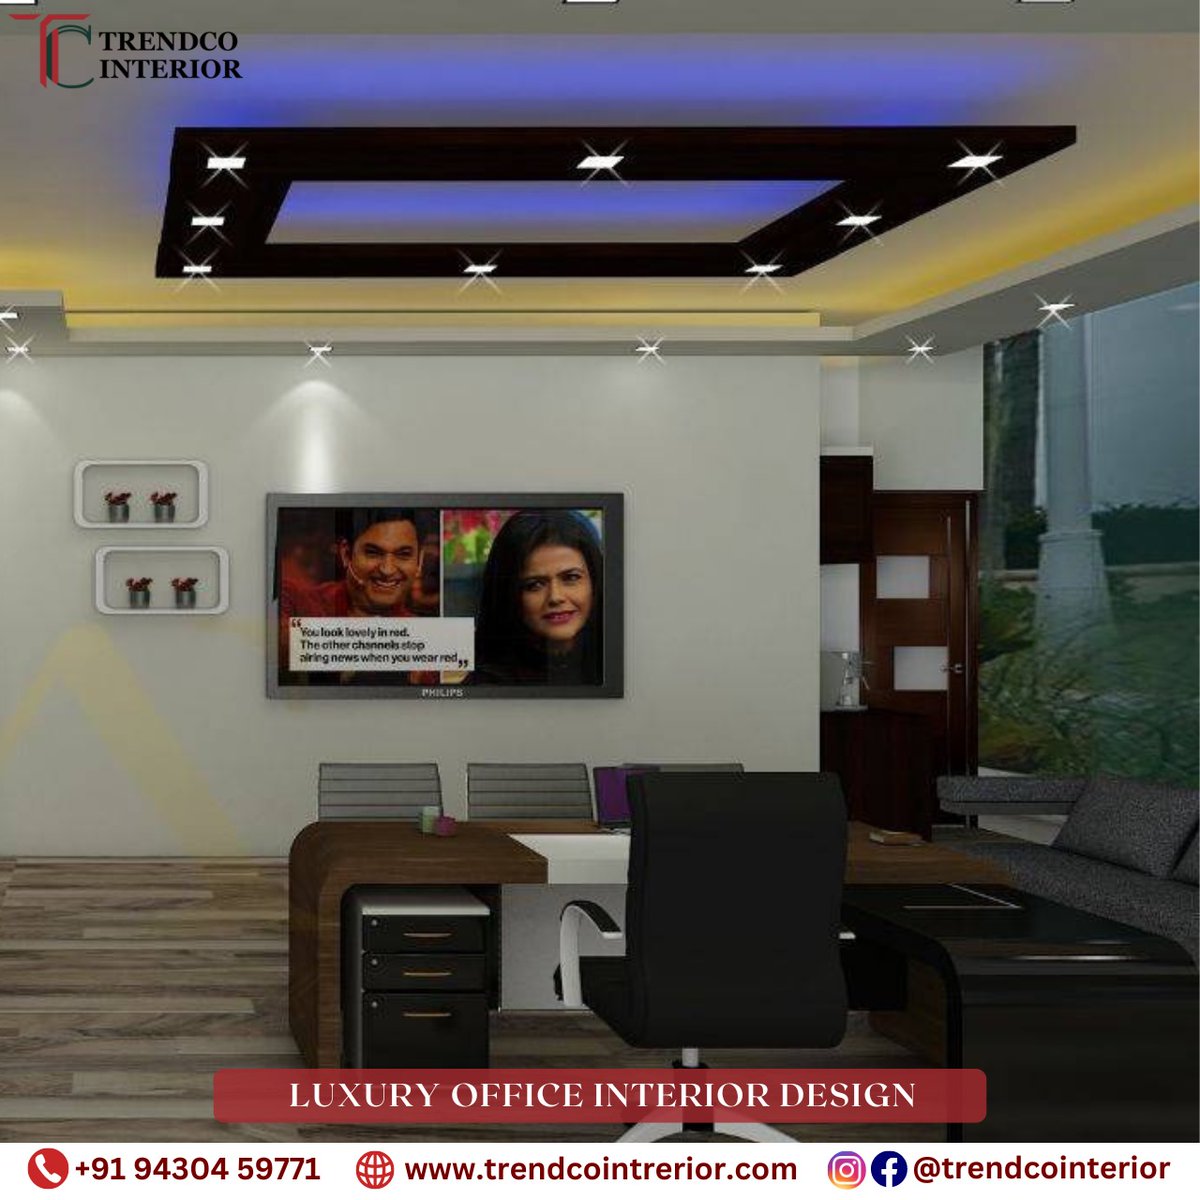 Luxury office interior design idea by the best interior designer in Patna, Trendco Interior
Click On:-bit.ly/3vISdzn
#officespace #officestyle #officedesignideas #PatnaNews #inspiration #HomeDecor #BiharNews #facebook #instagram #Patna #modernliving #patnajunction